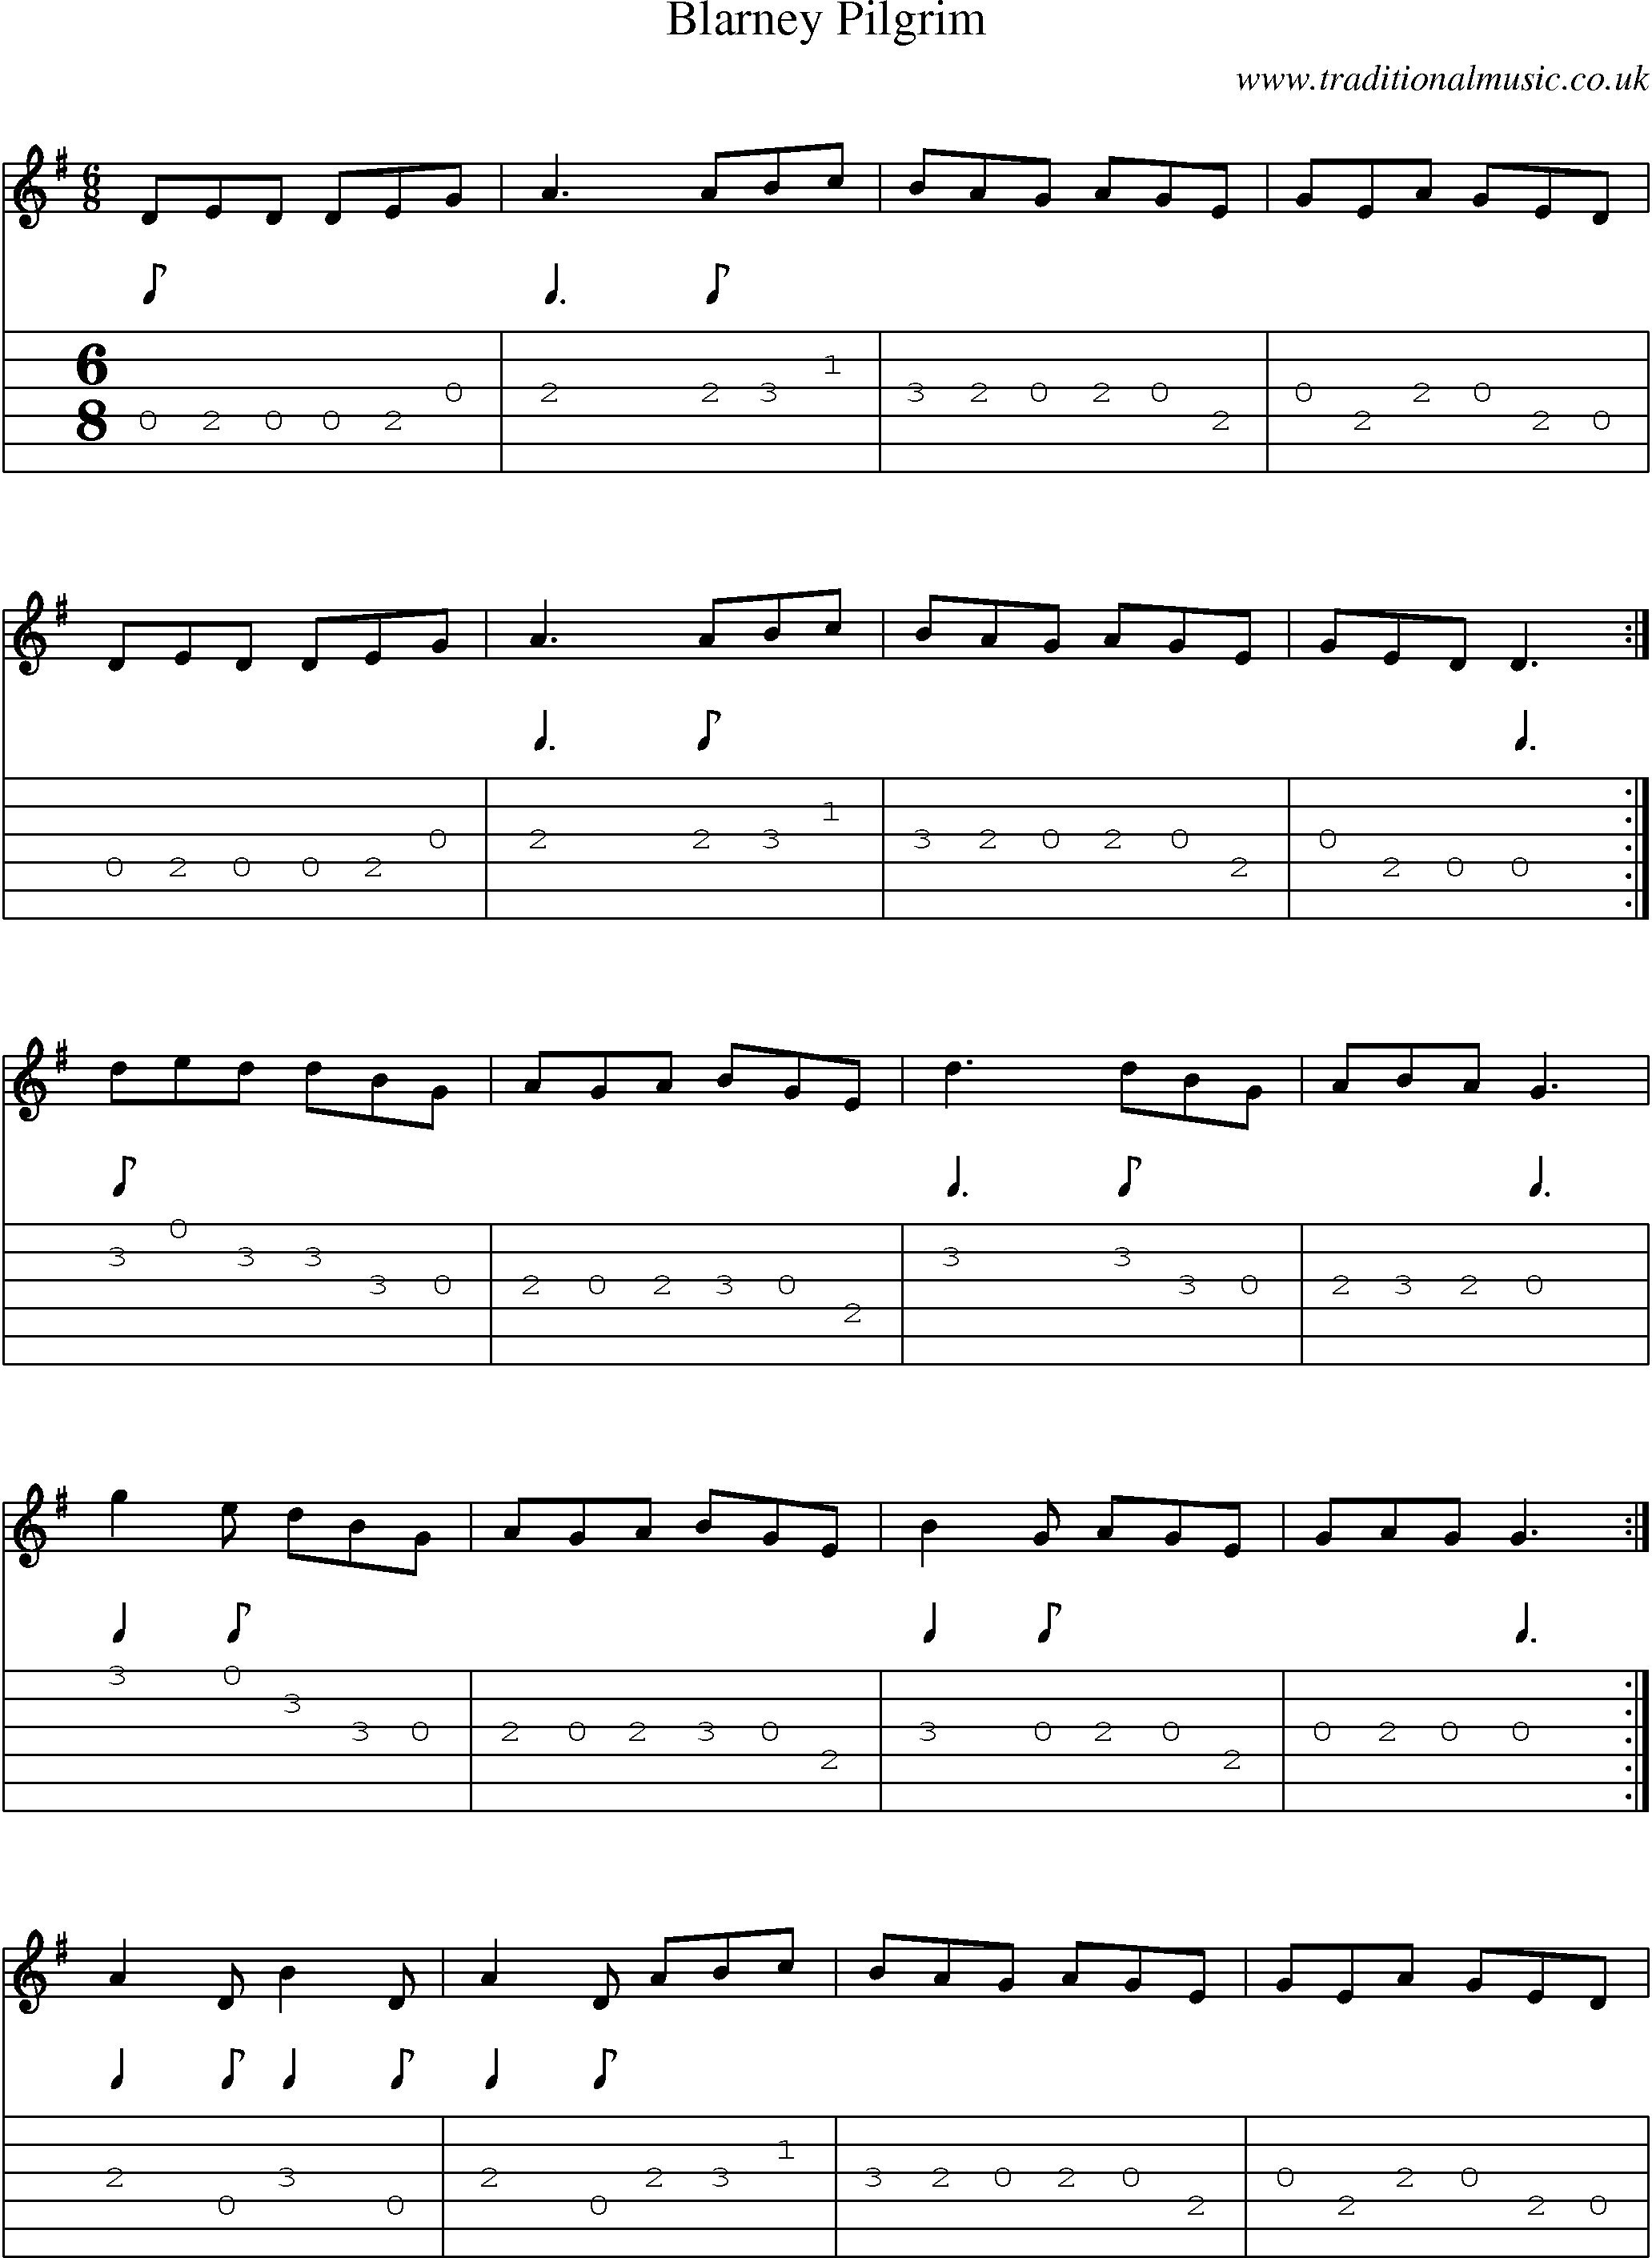 Music Score and Guitar Tabs for Blarney Pilgrim